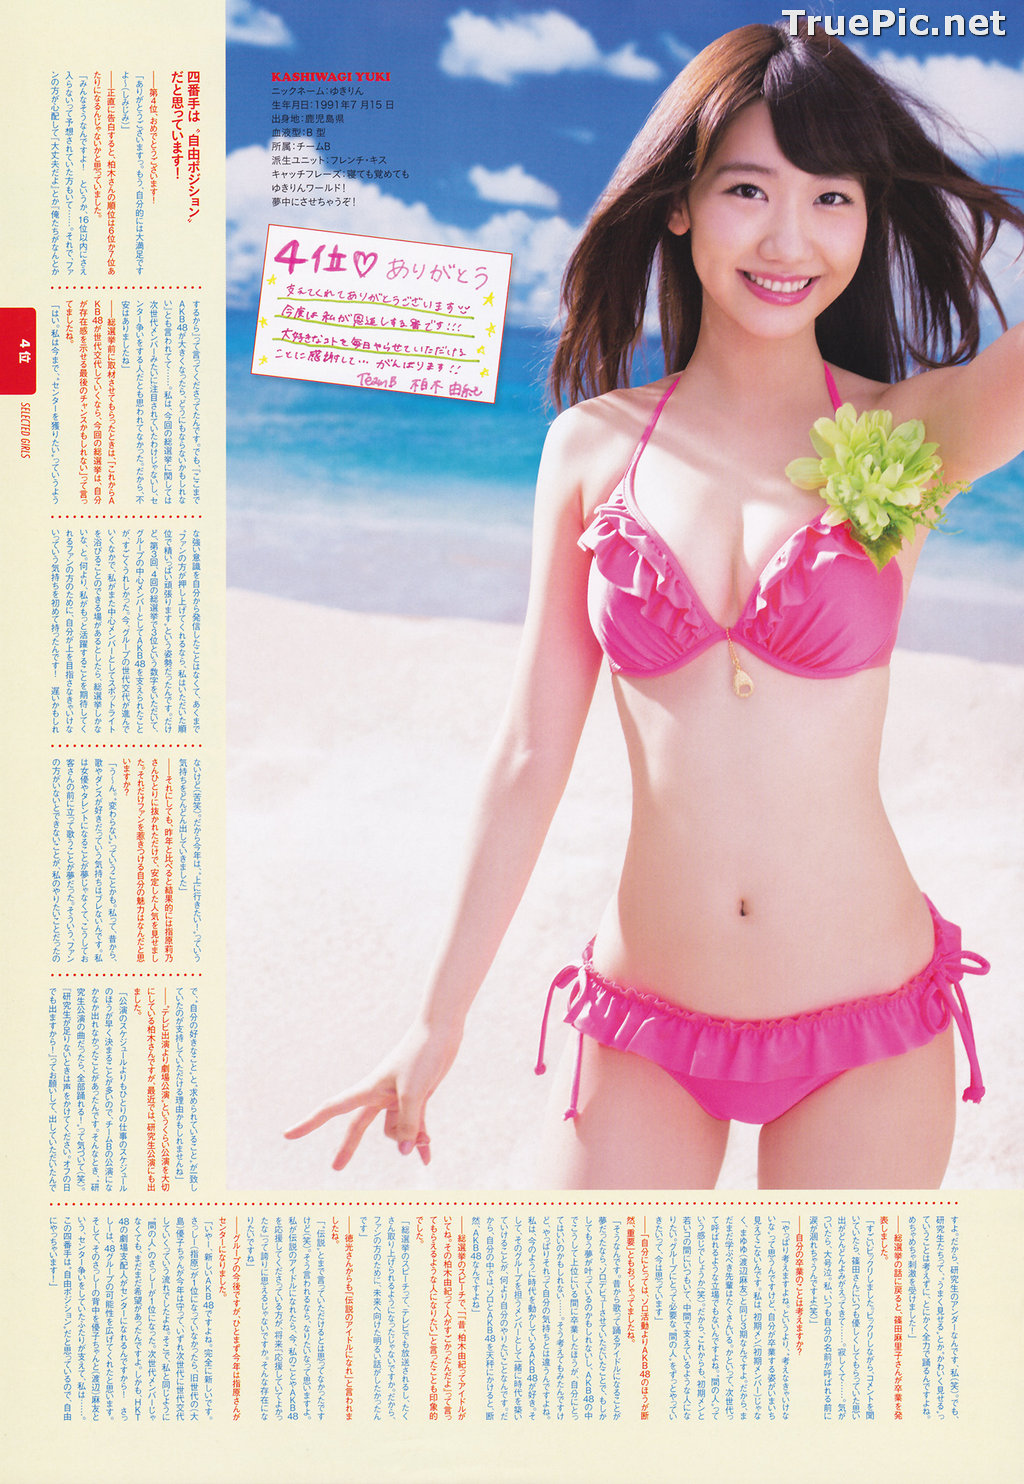 Image AKB48 General Election! Swimsuit Surprise Announcement 2013 - TruePic.net - Picture-22